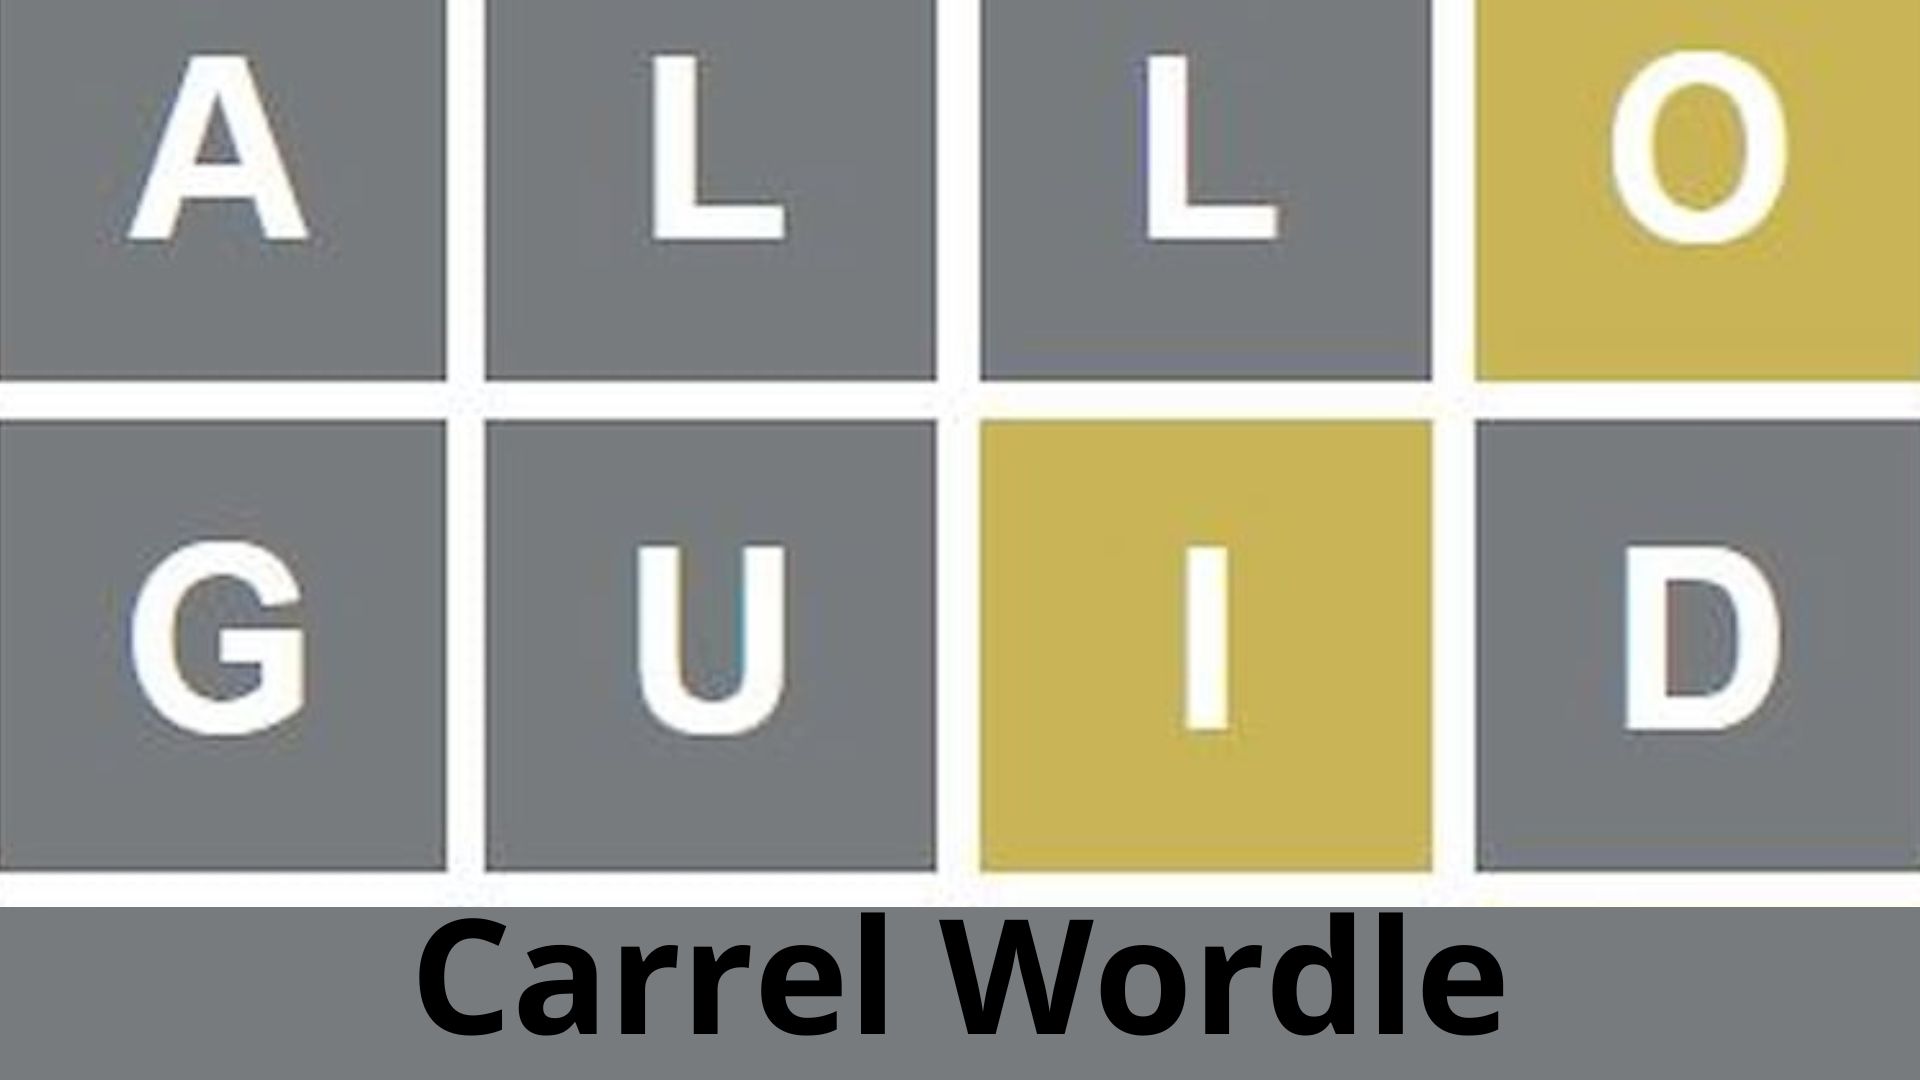 Carrel Wordle